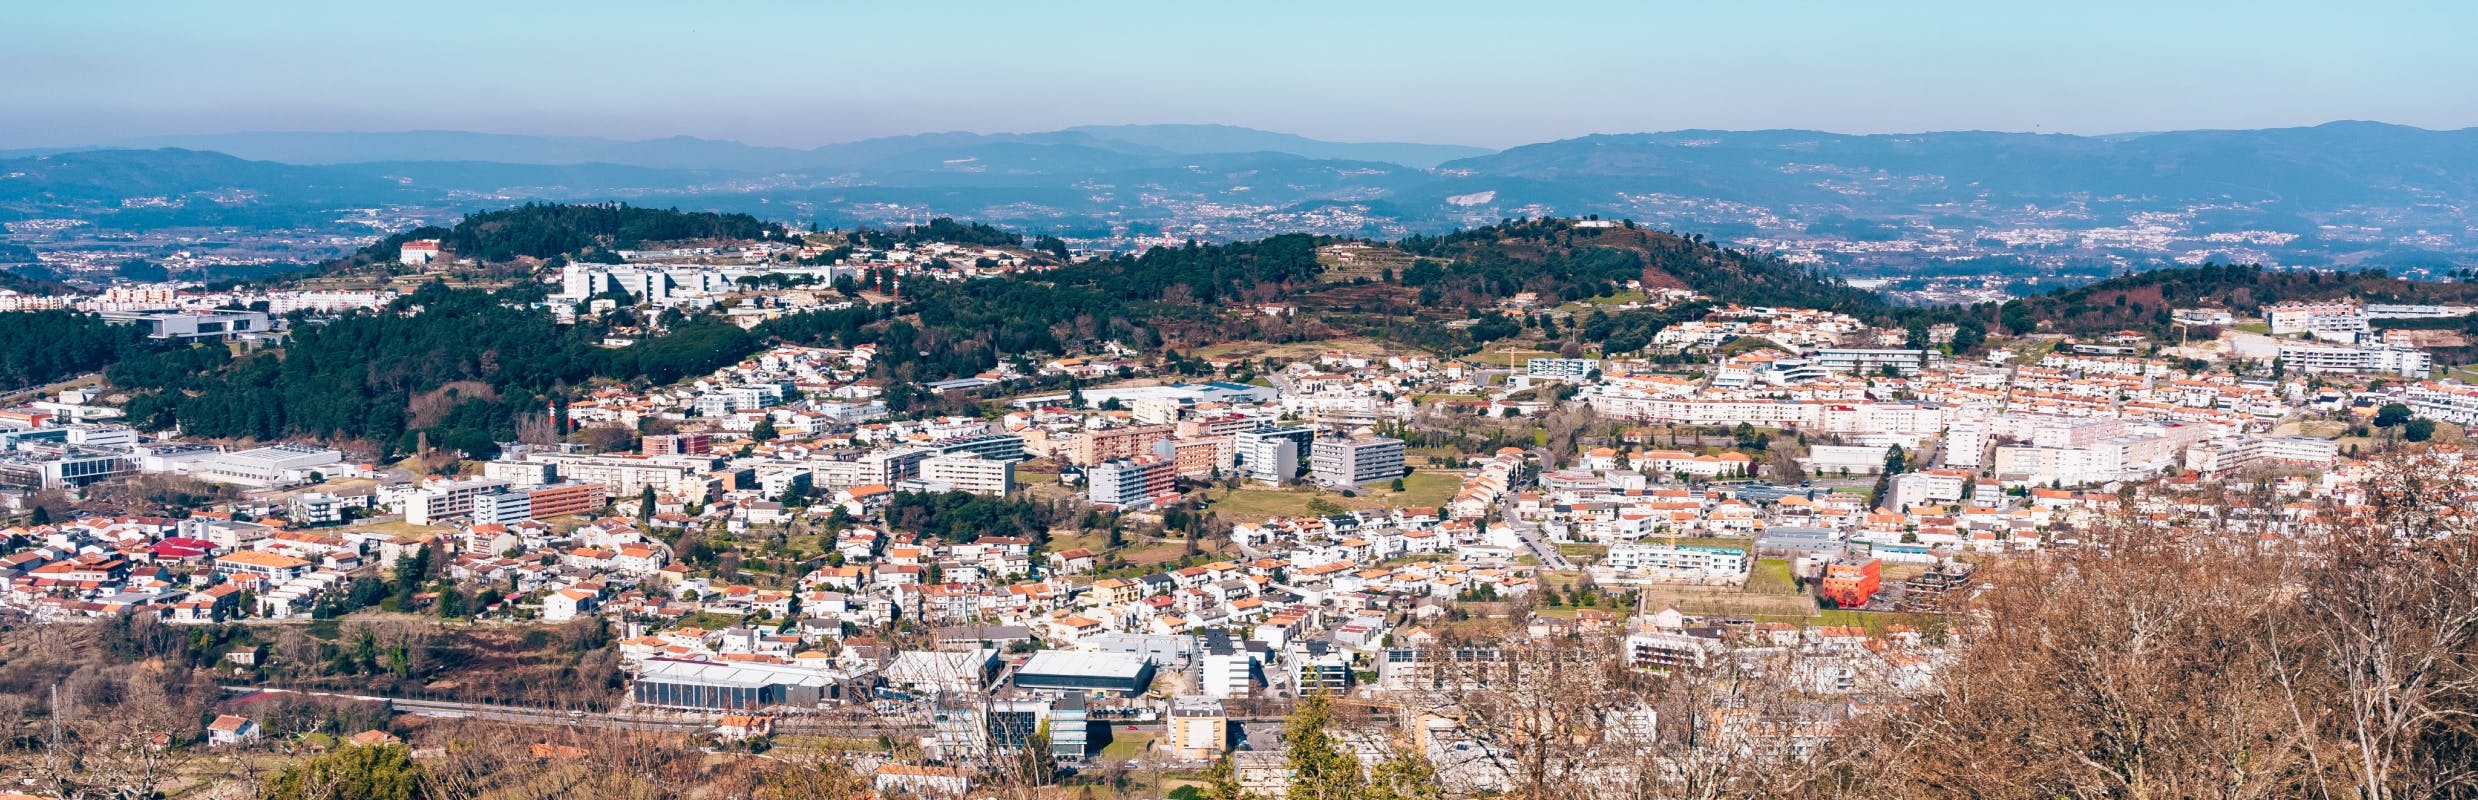 Vista aérea da cidade de Braga